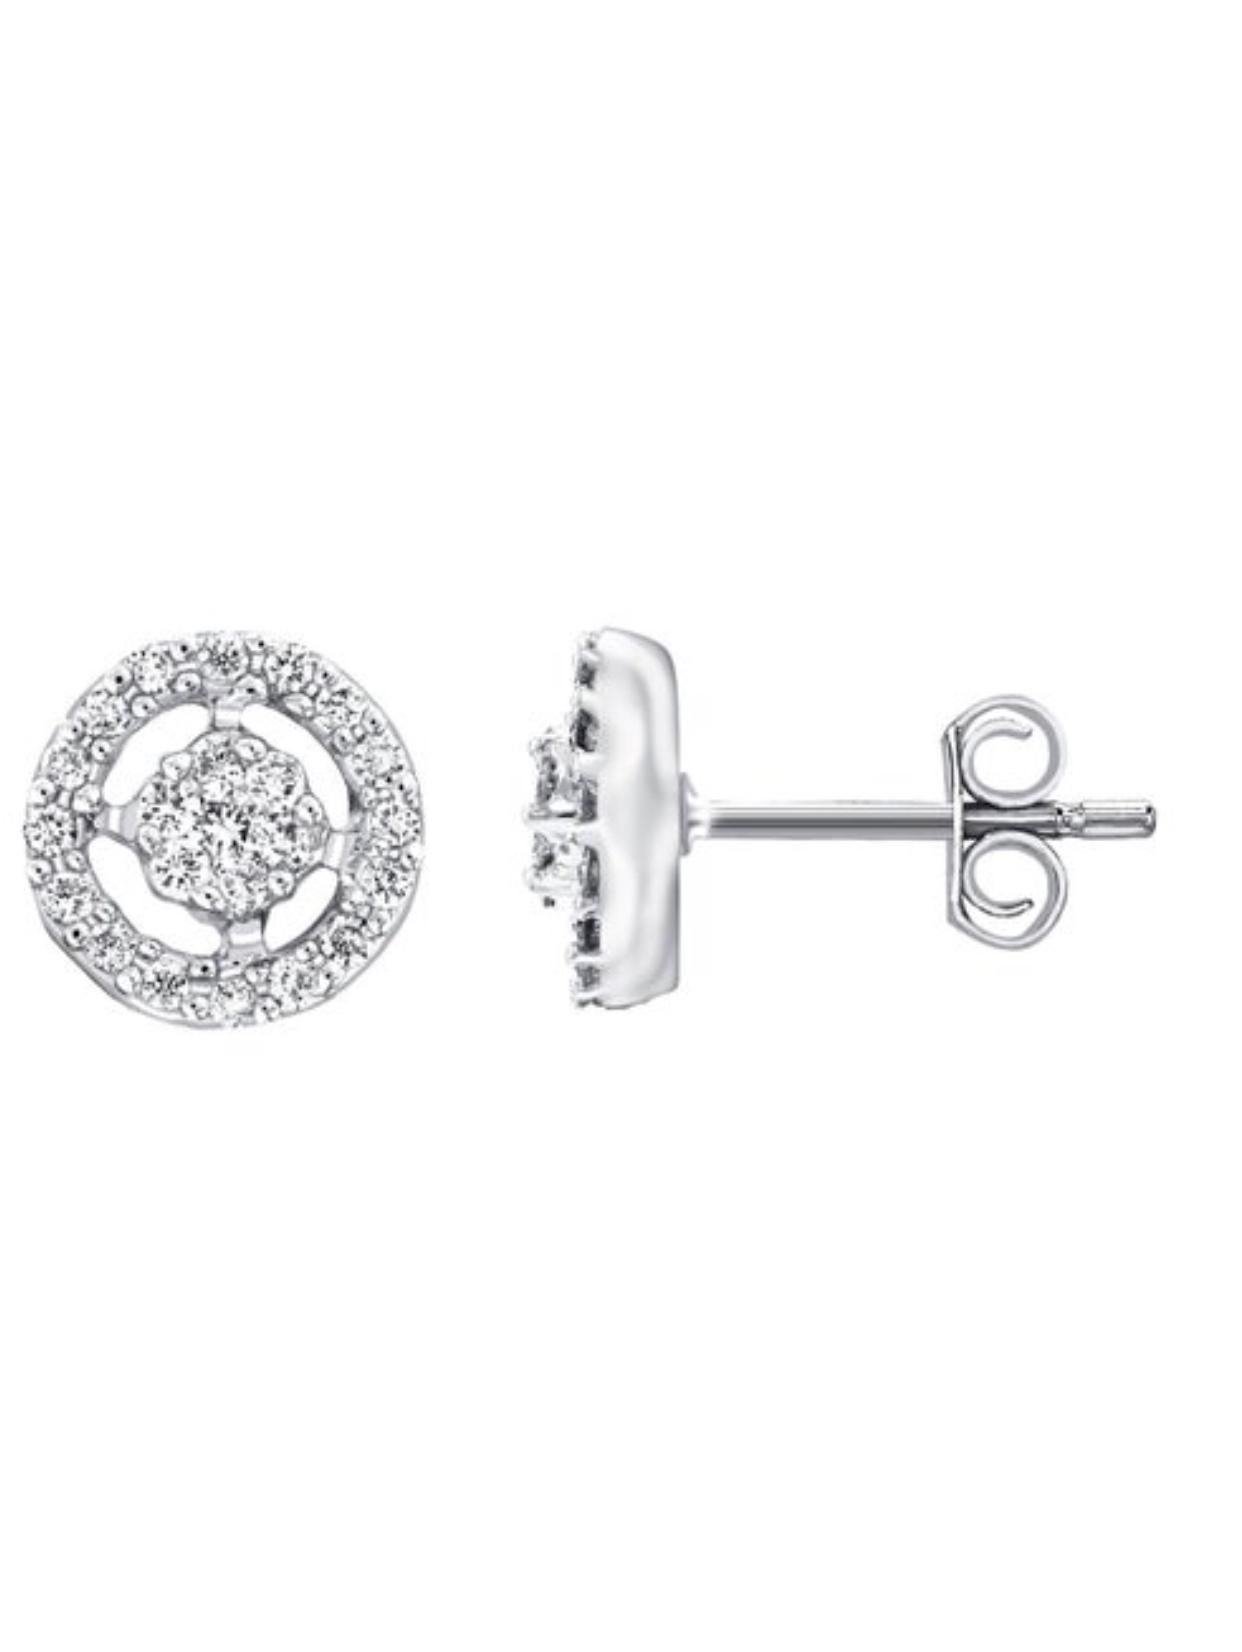 Round Cut Earrings 0.75 Carat Cluster Halo 18 Karat White Gold Round White Diamond Stud For Sale